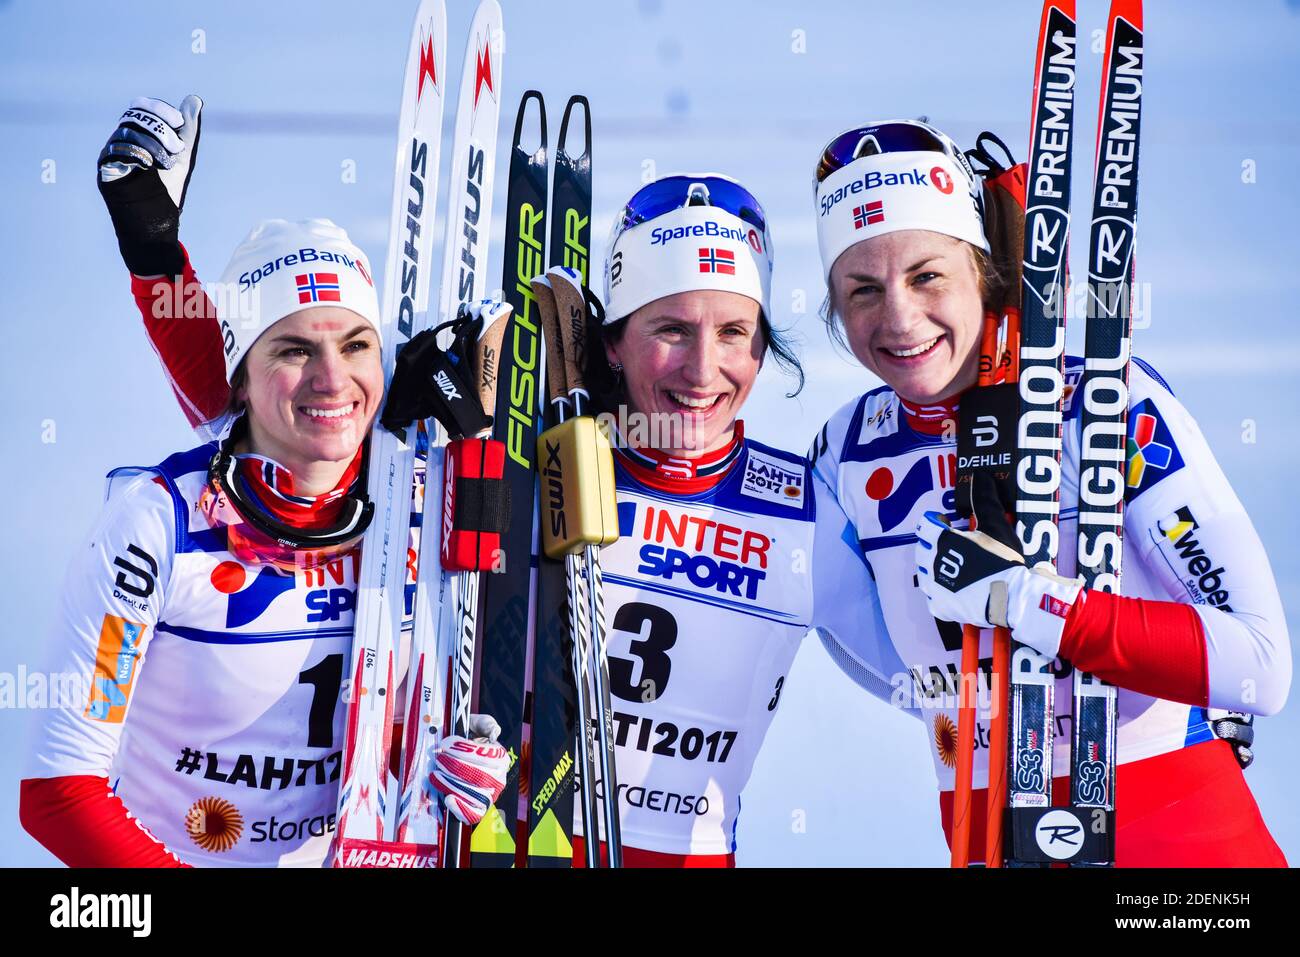 Norwegian Marit Bjørgen (al centro) dopo aver vinto il 30-K ai Campionati del mondo 2017, Lahti, Finlandia.(L) Heidi Weng. R) Astrid Uhrenholdt Jacobsen. Foto Stock